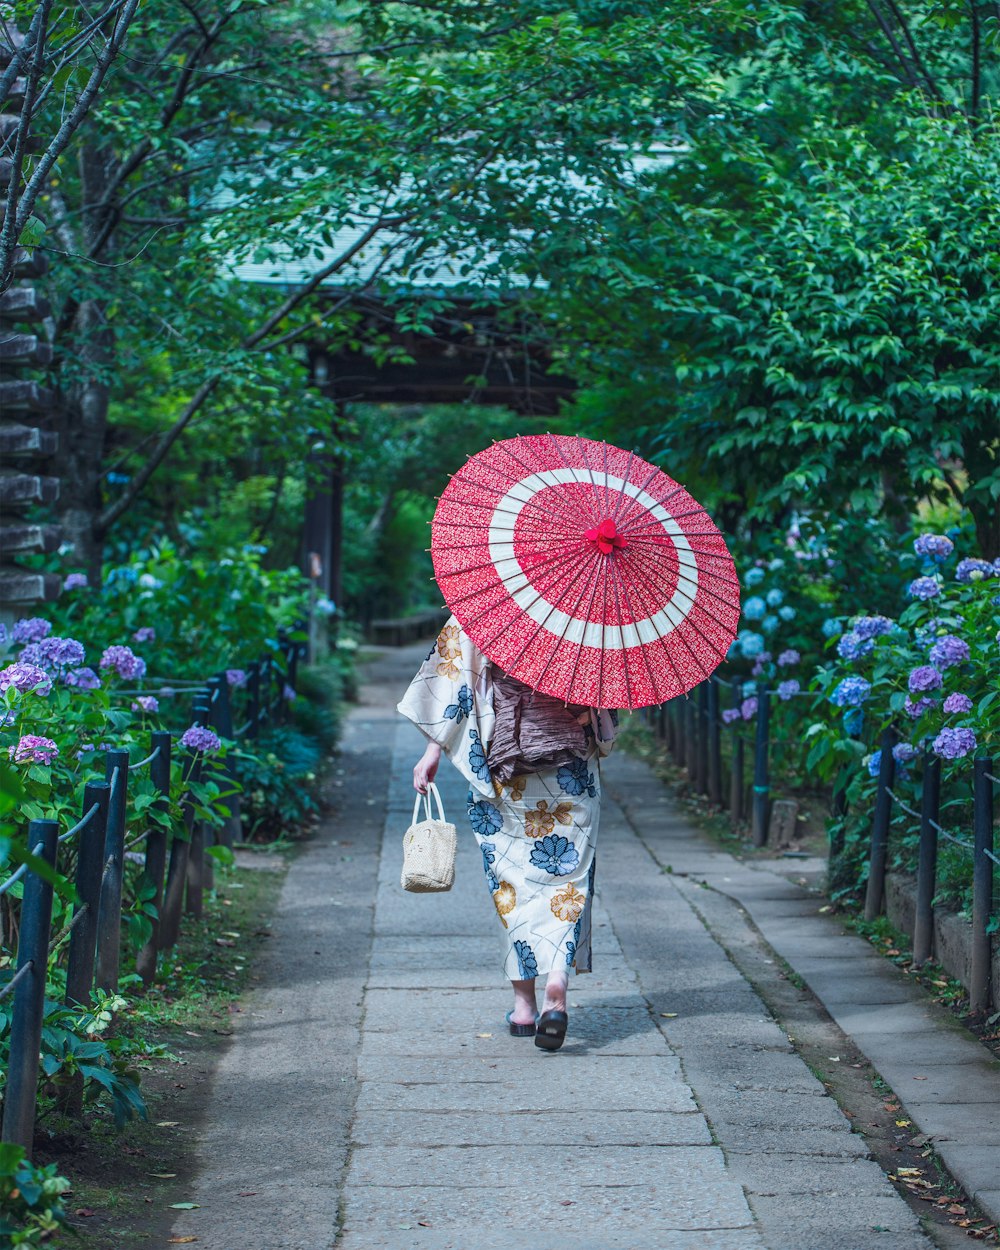 a couple of women walk down a sidewalk with an umbrella